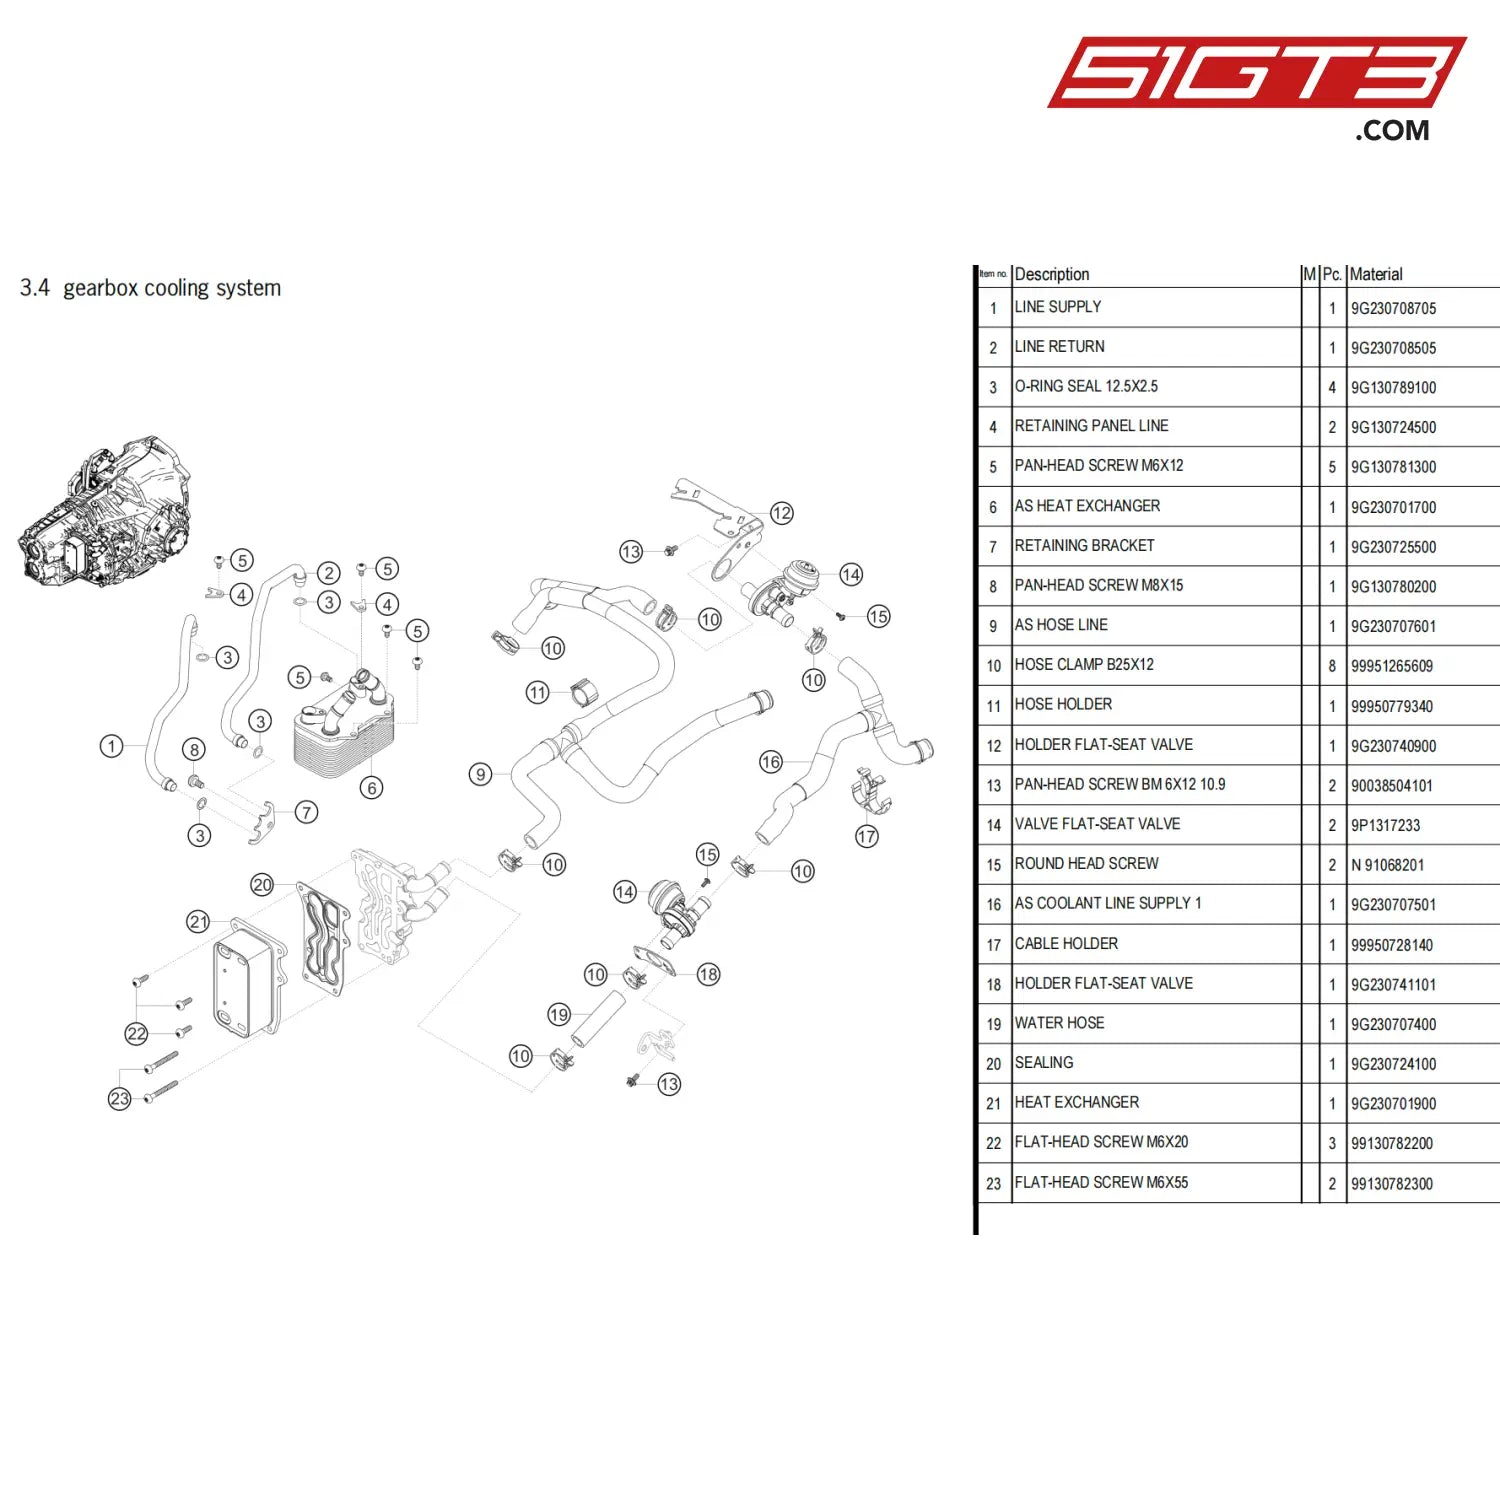 Retaining Bracket - 9G230725500 [Porsche 718 Cayman Gt4 Clubsport] Gearbox Cooling System